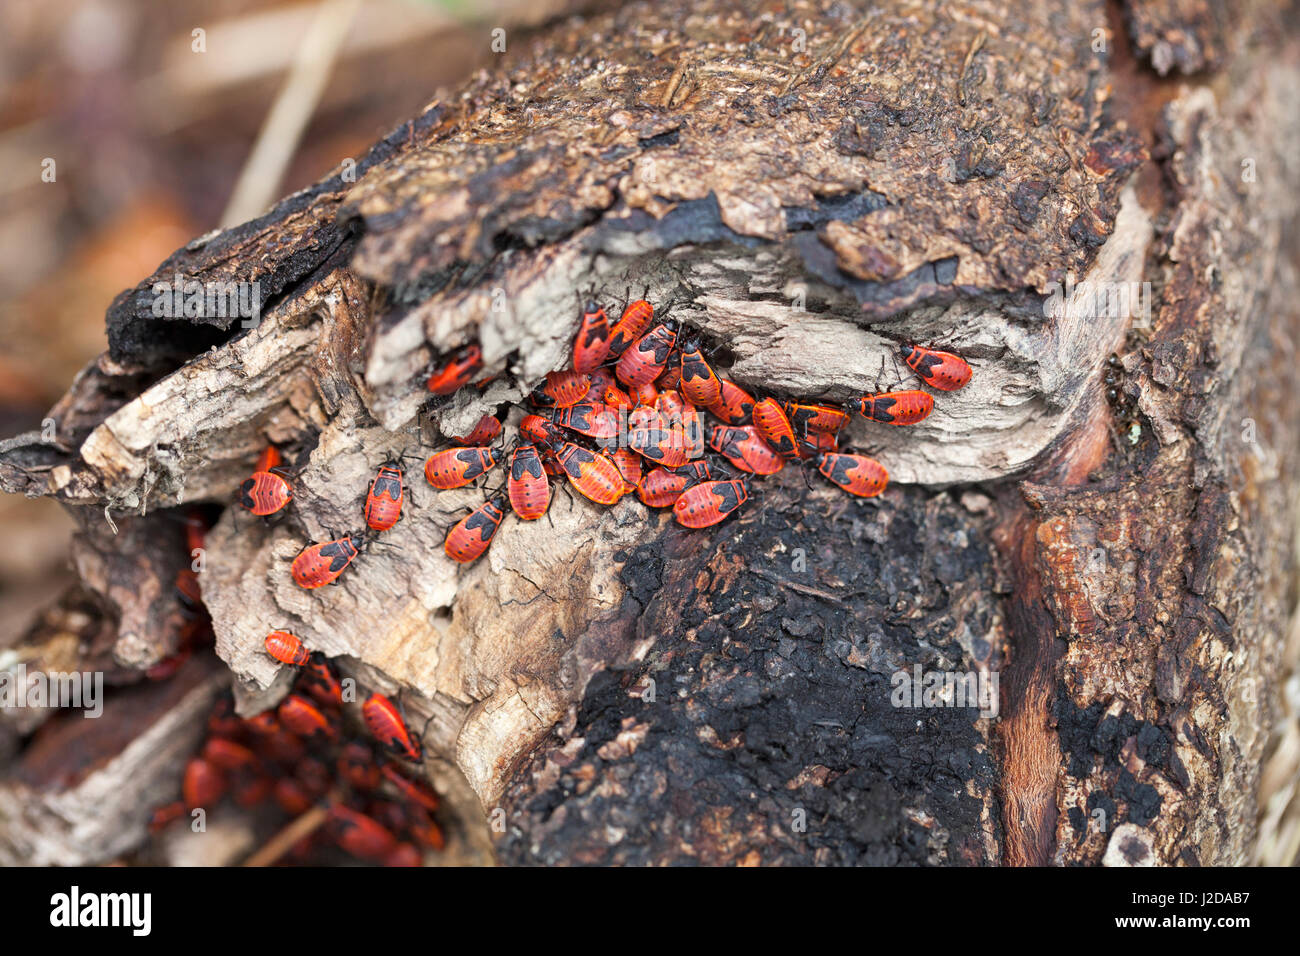 A group of firebugs on a log Stock Photo